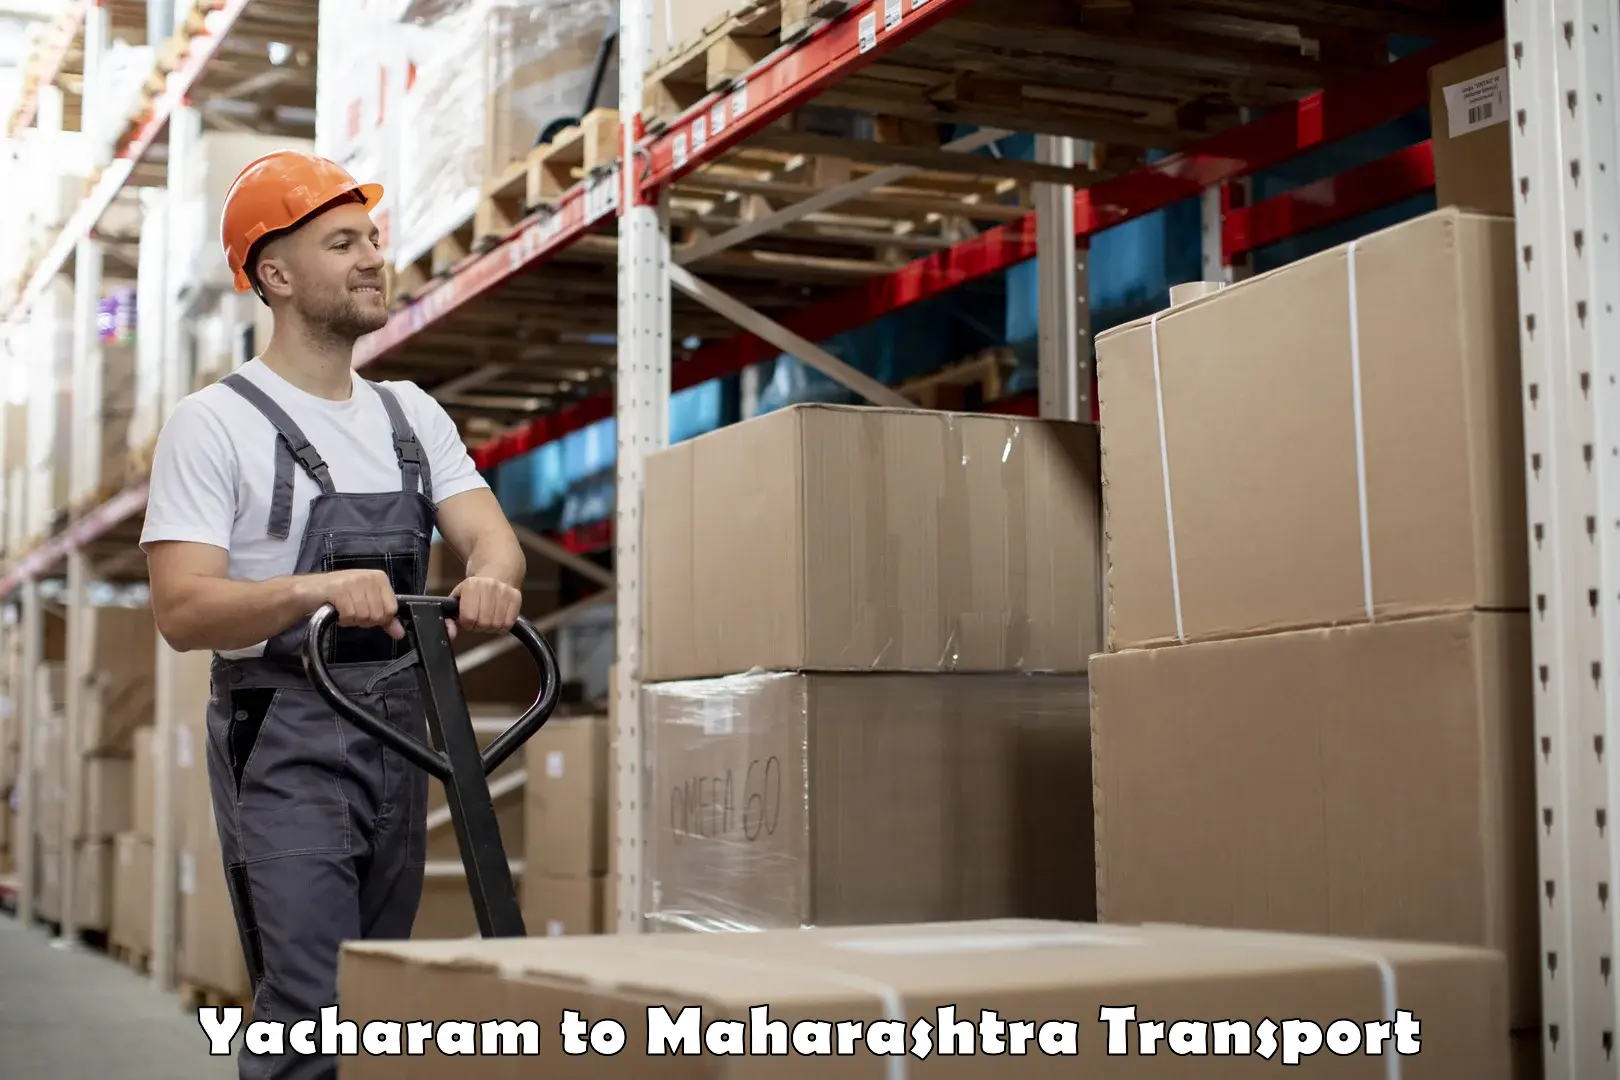 Truck transport companies in India Yacharam to DY Patil Vidyapeeth Mumbai